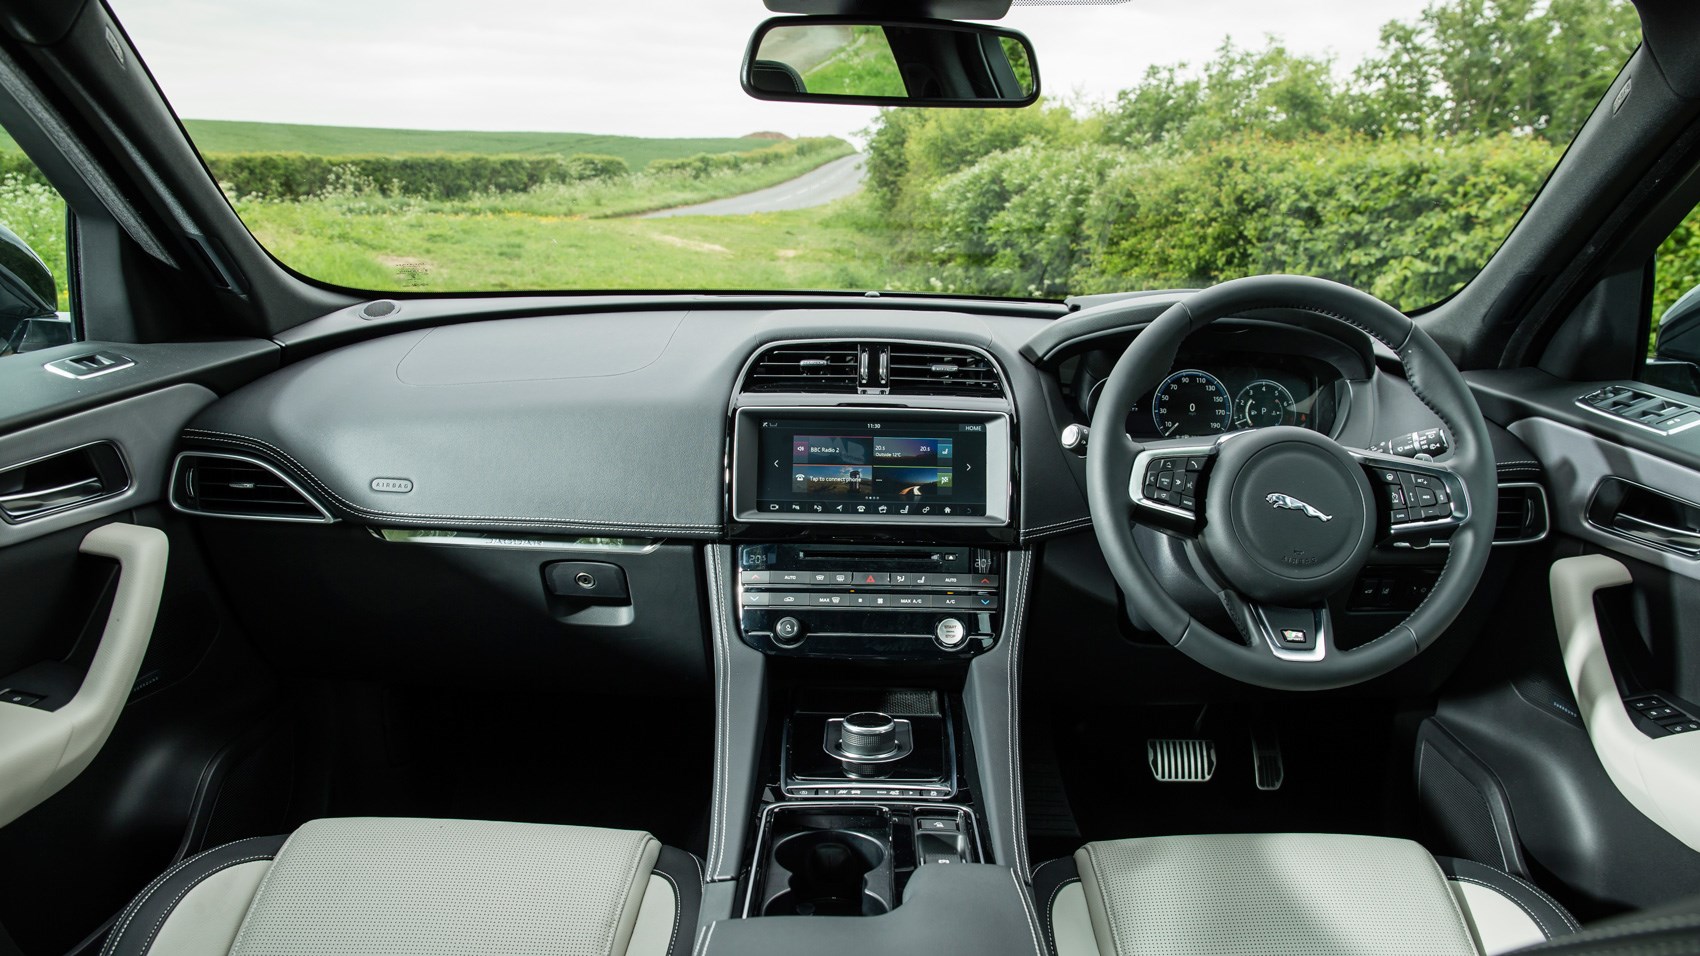 Jaguar Suv Inside New Used Car Reviews 2018